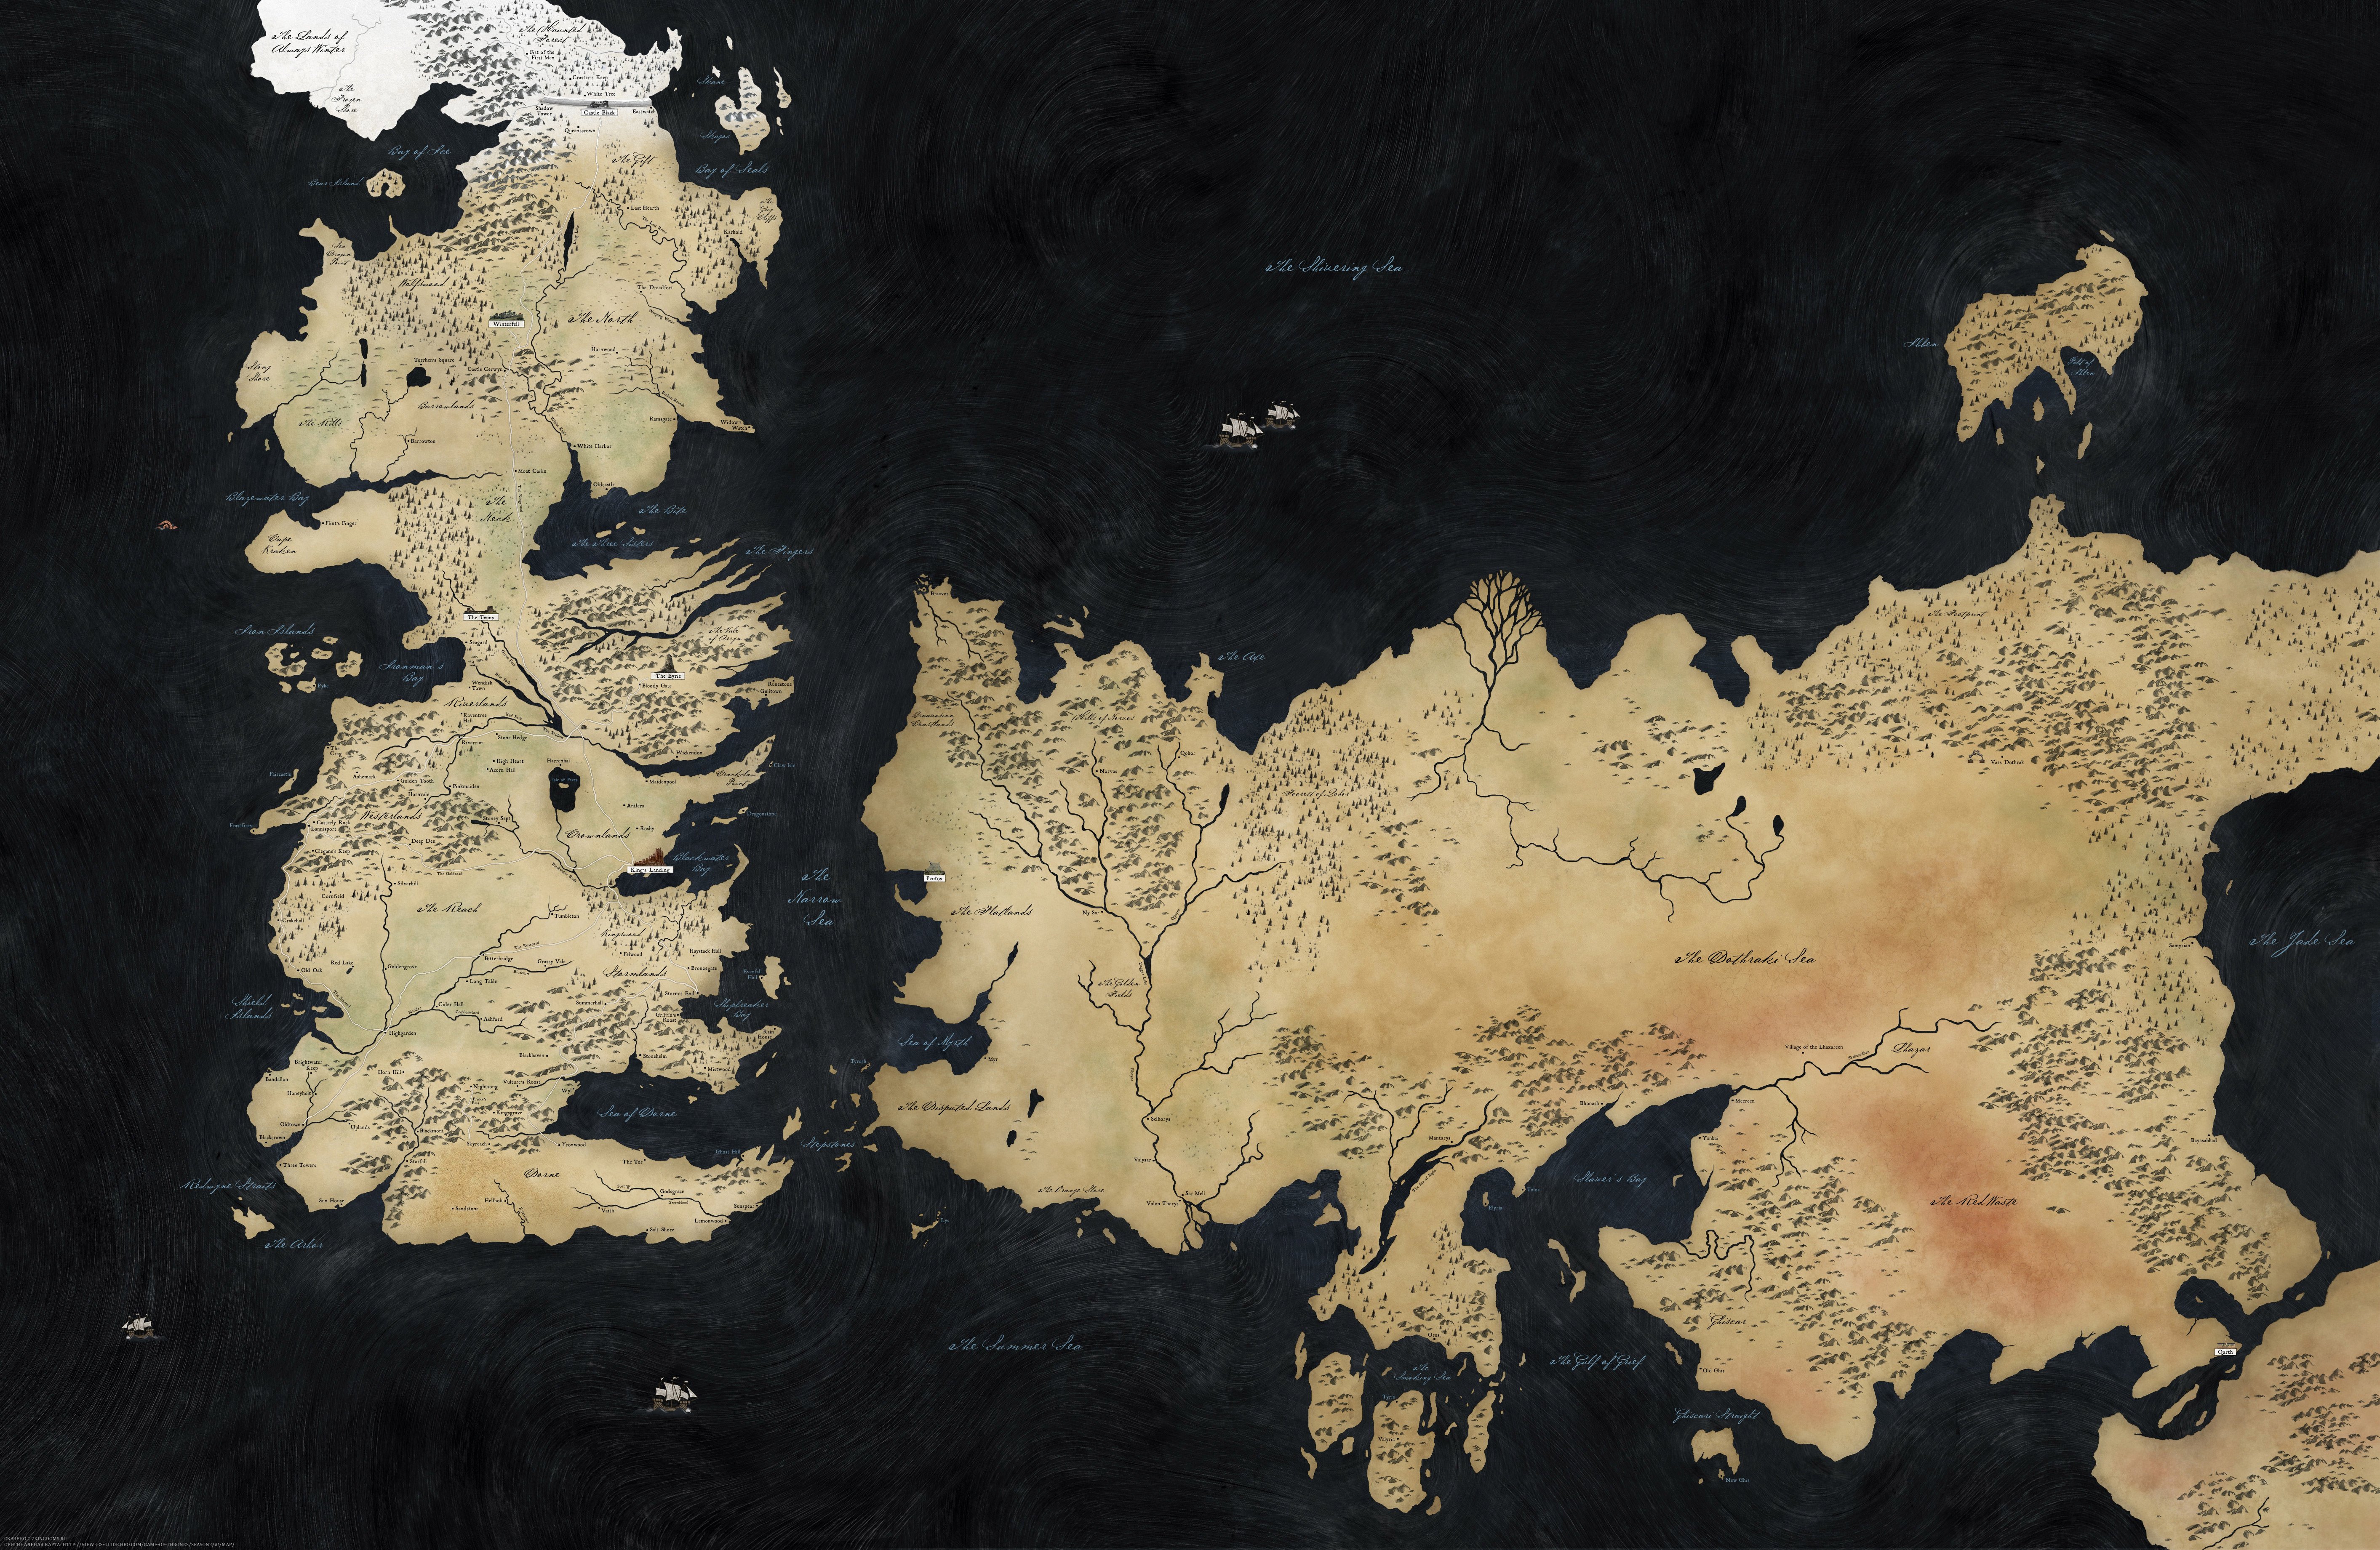 http://7kingdoms.ru/wp-content/uploads/2009/02/game-of-thrones-big-map.jpg